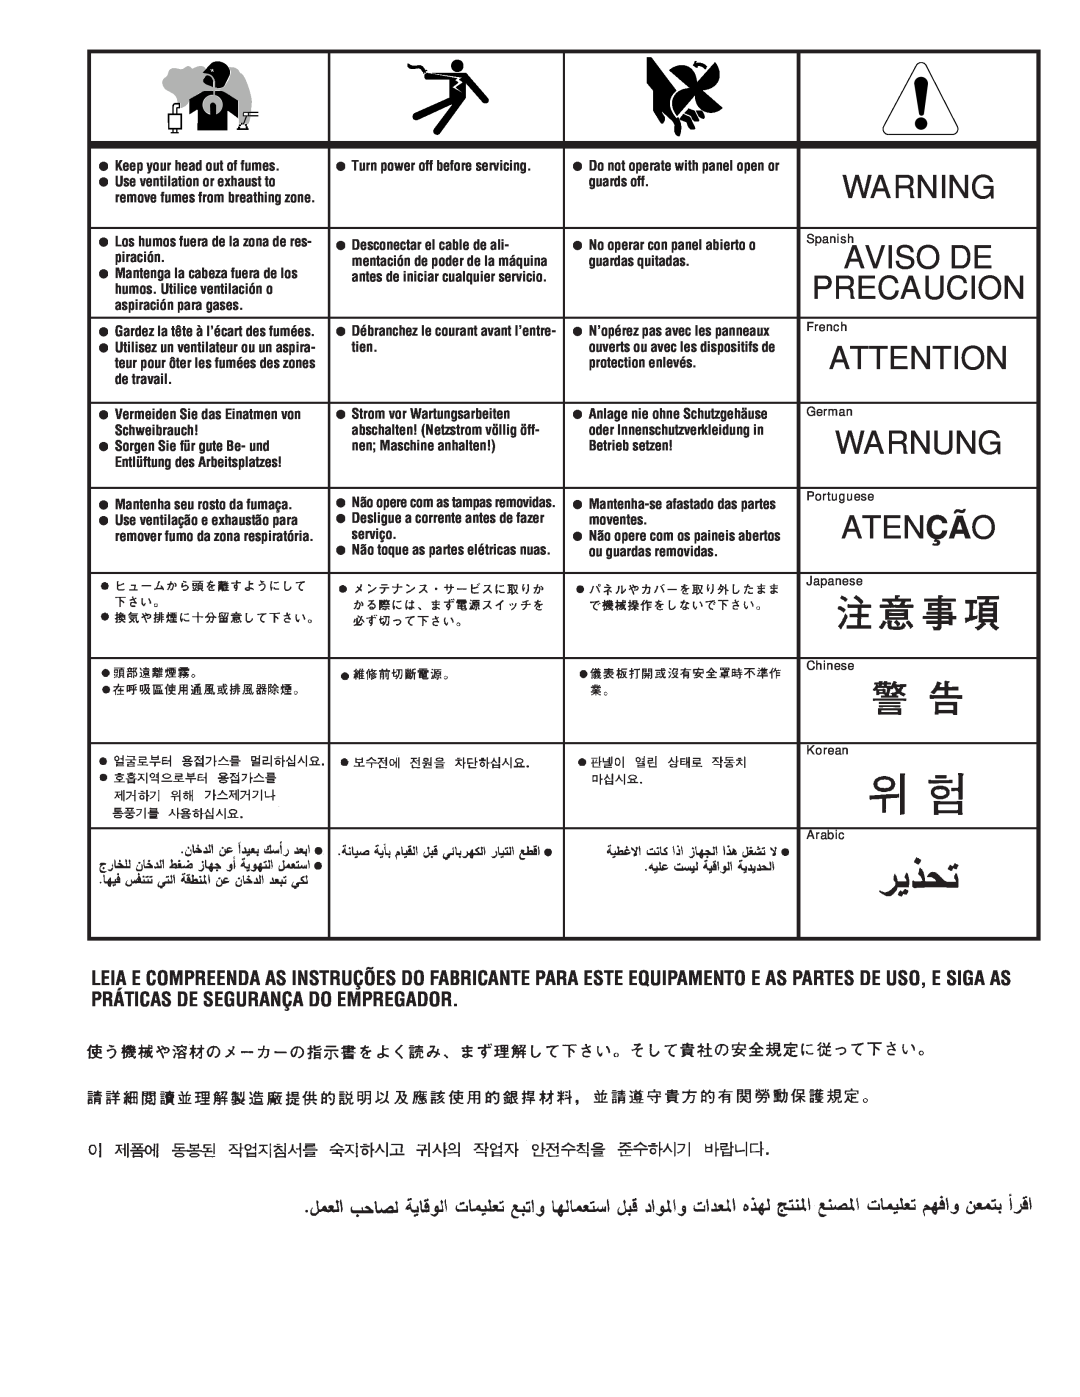 Lincoln Electric CV-300 manual Warnung, Atenção, Precaucion, Aviso De, Keep your head out of fumes 